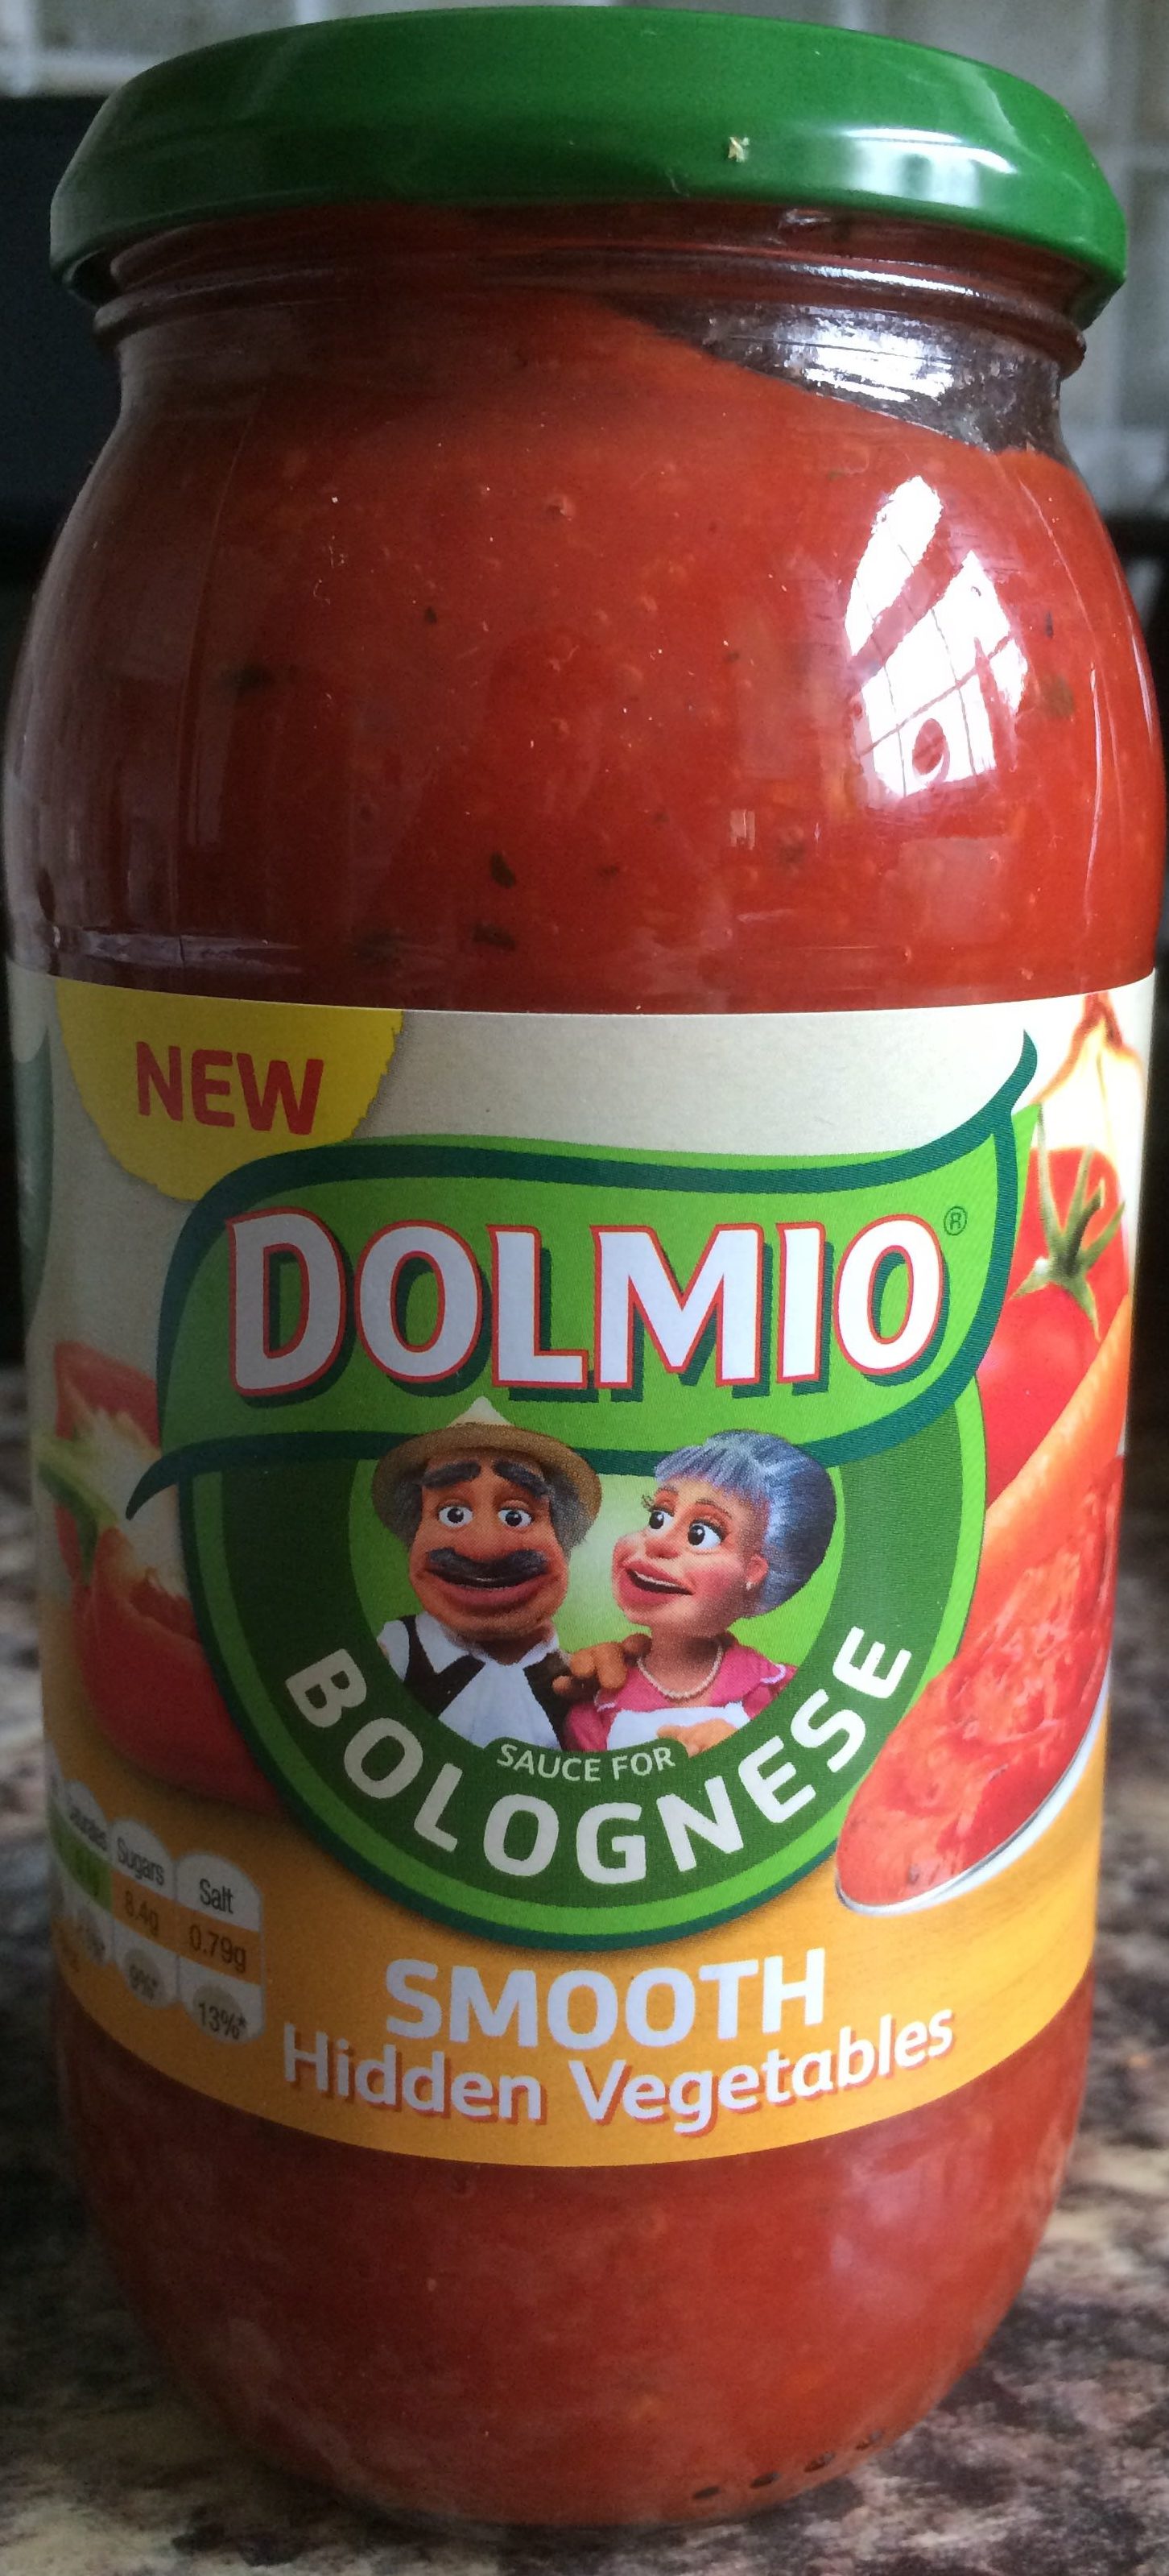 Sauce for Bolognese, Hidden Vegetables - Product